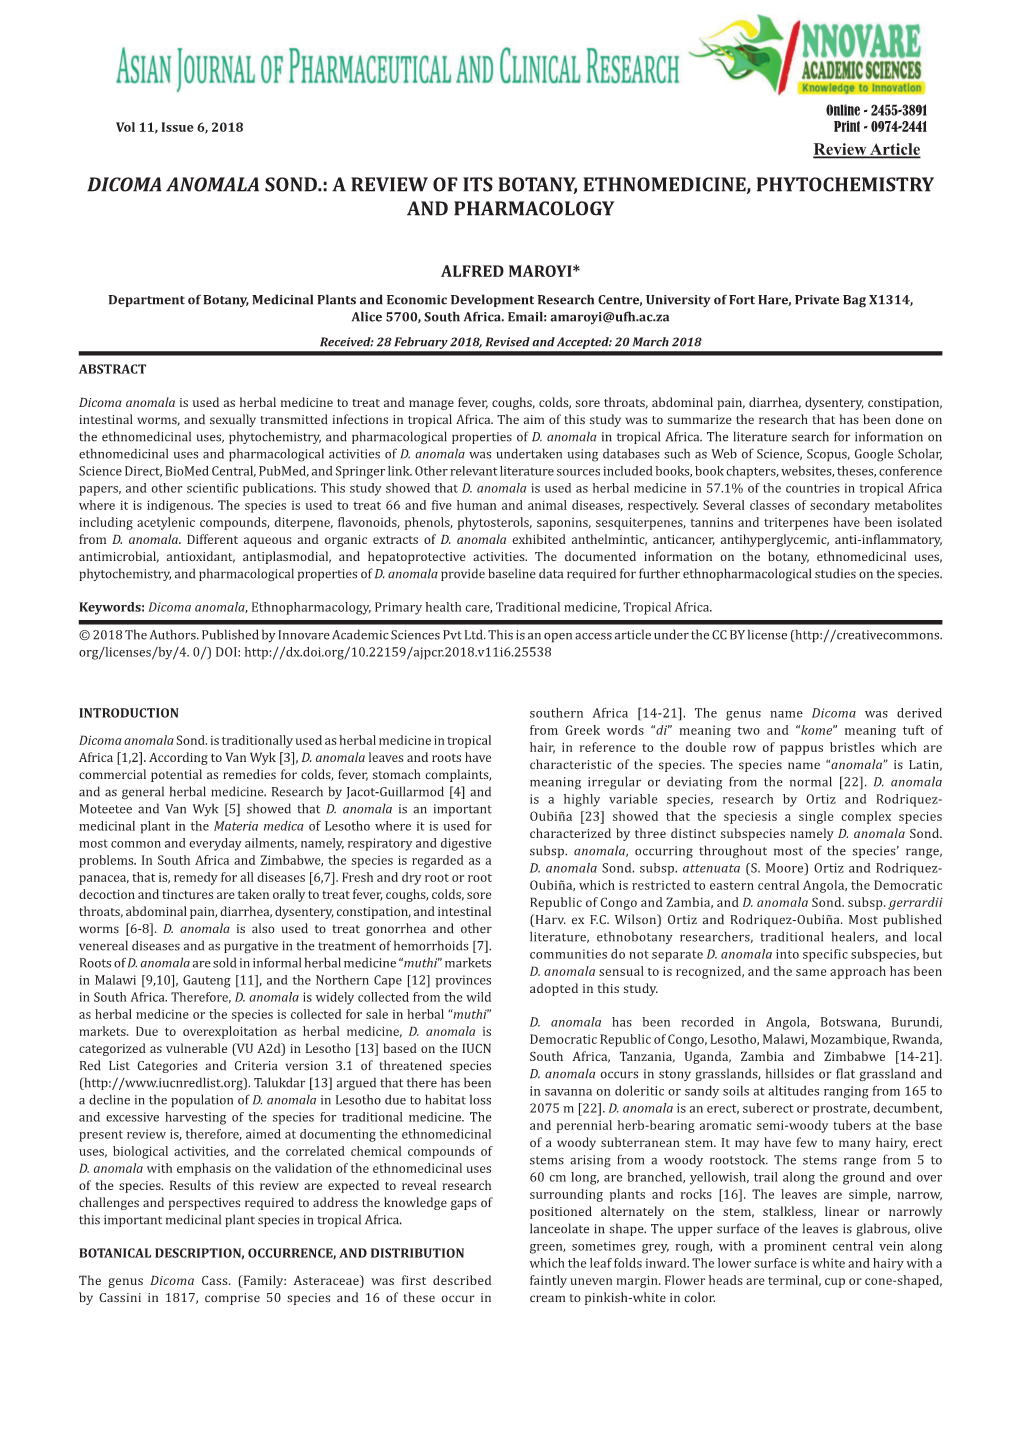 Dicoma Anomala Sond.: a Review of Its Botany, Ethnomedicine, Phytochemistry and Pharmacology